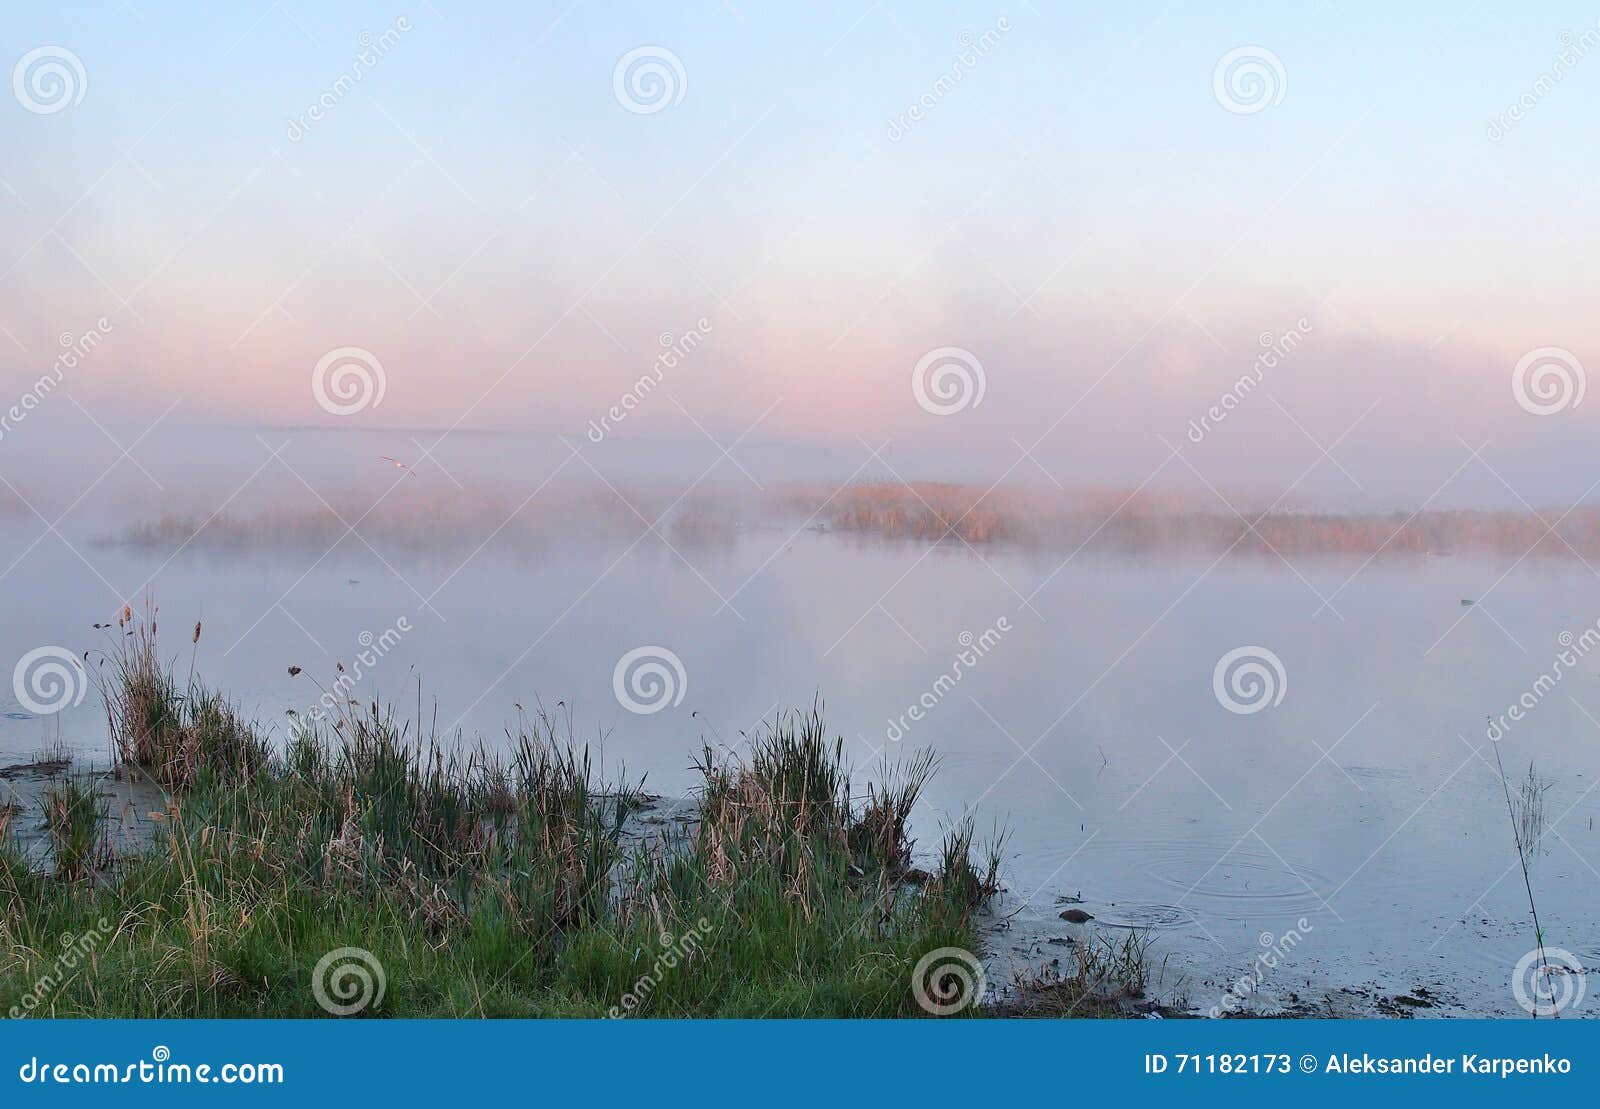 fog on the river yaman